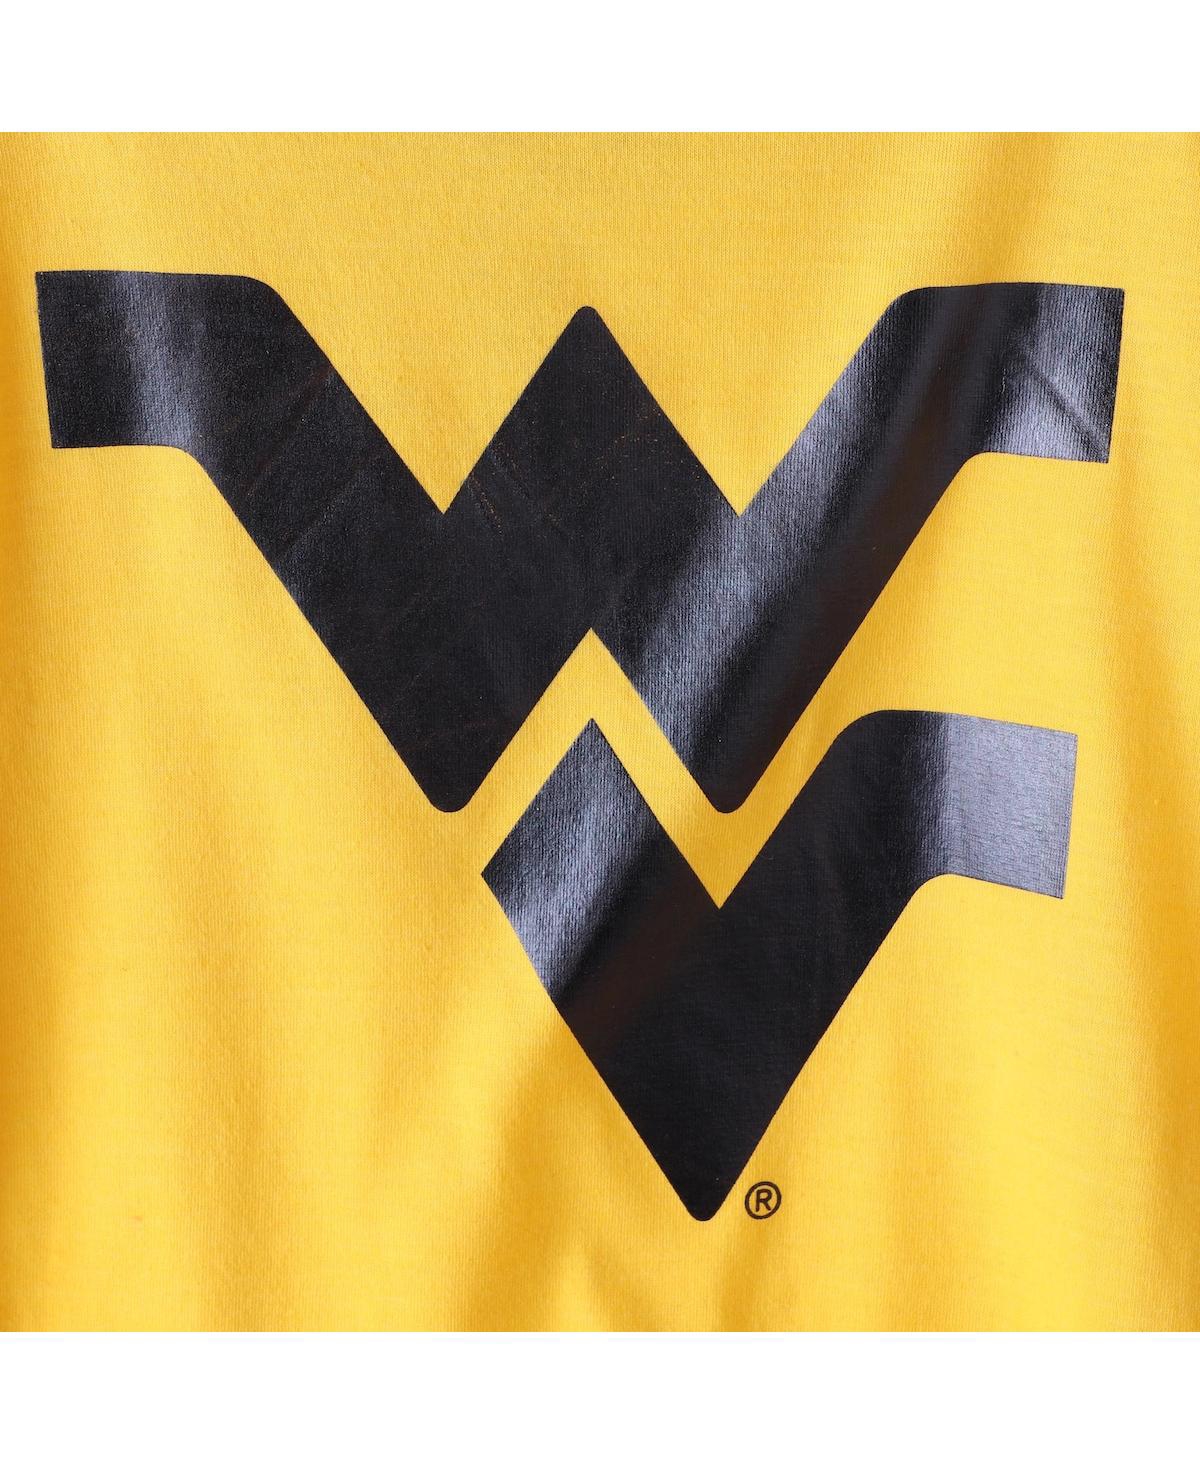 Shop Colosseum Women's  Gold West Virginia Mountaineers Trey Dolman Long Sleeve T-shirt